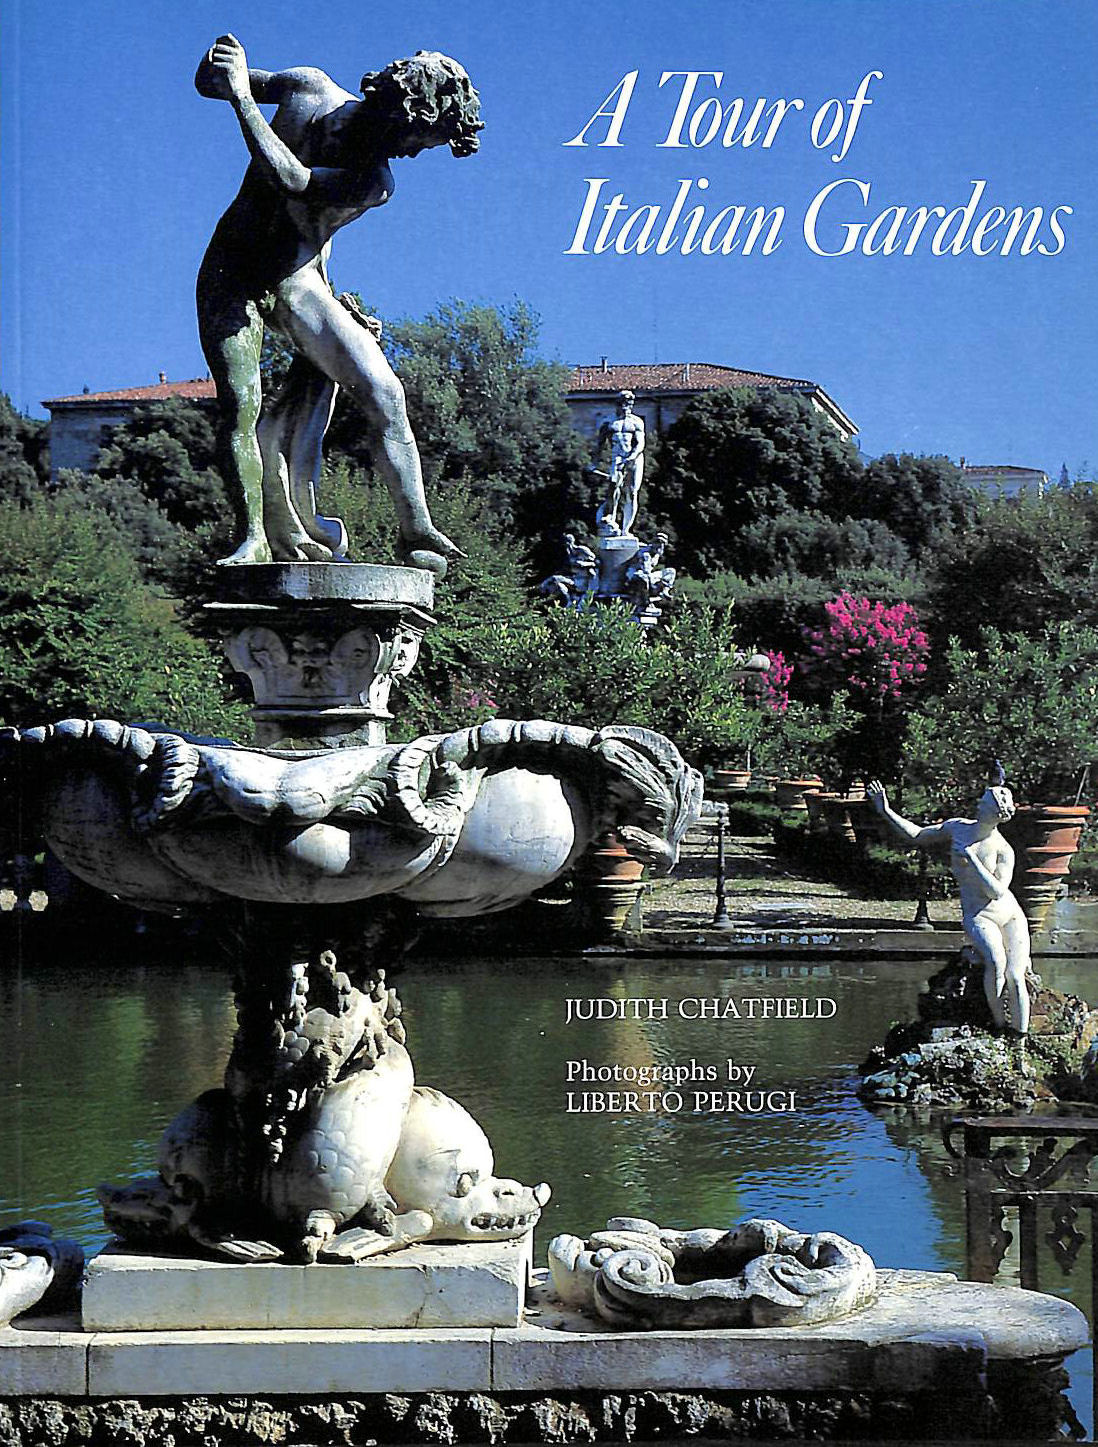 CHATFIELD, JUDITH; PERUGI, LIBERTO [ILLUSTRATOR]; PERUGI, LIBERTO [PHOTOGRAPHER]; - A Tour of Italian Gardens